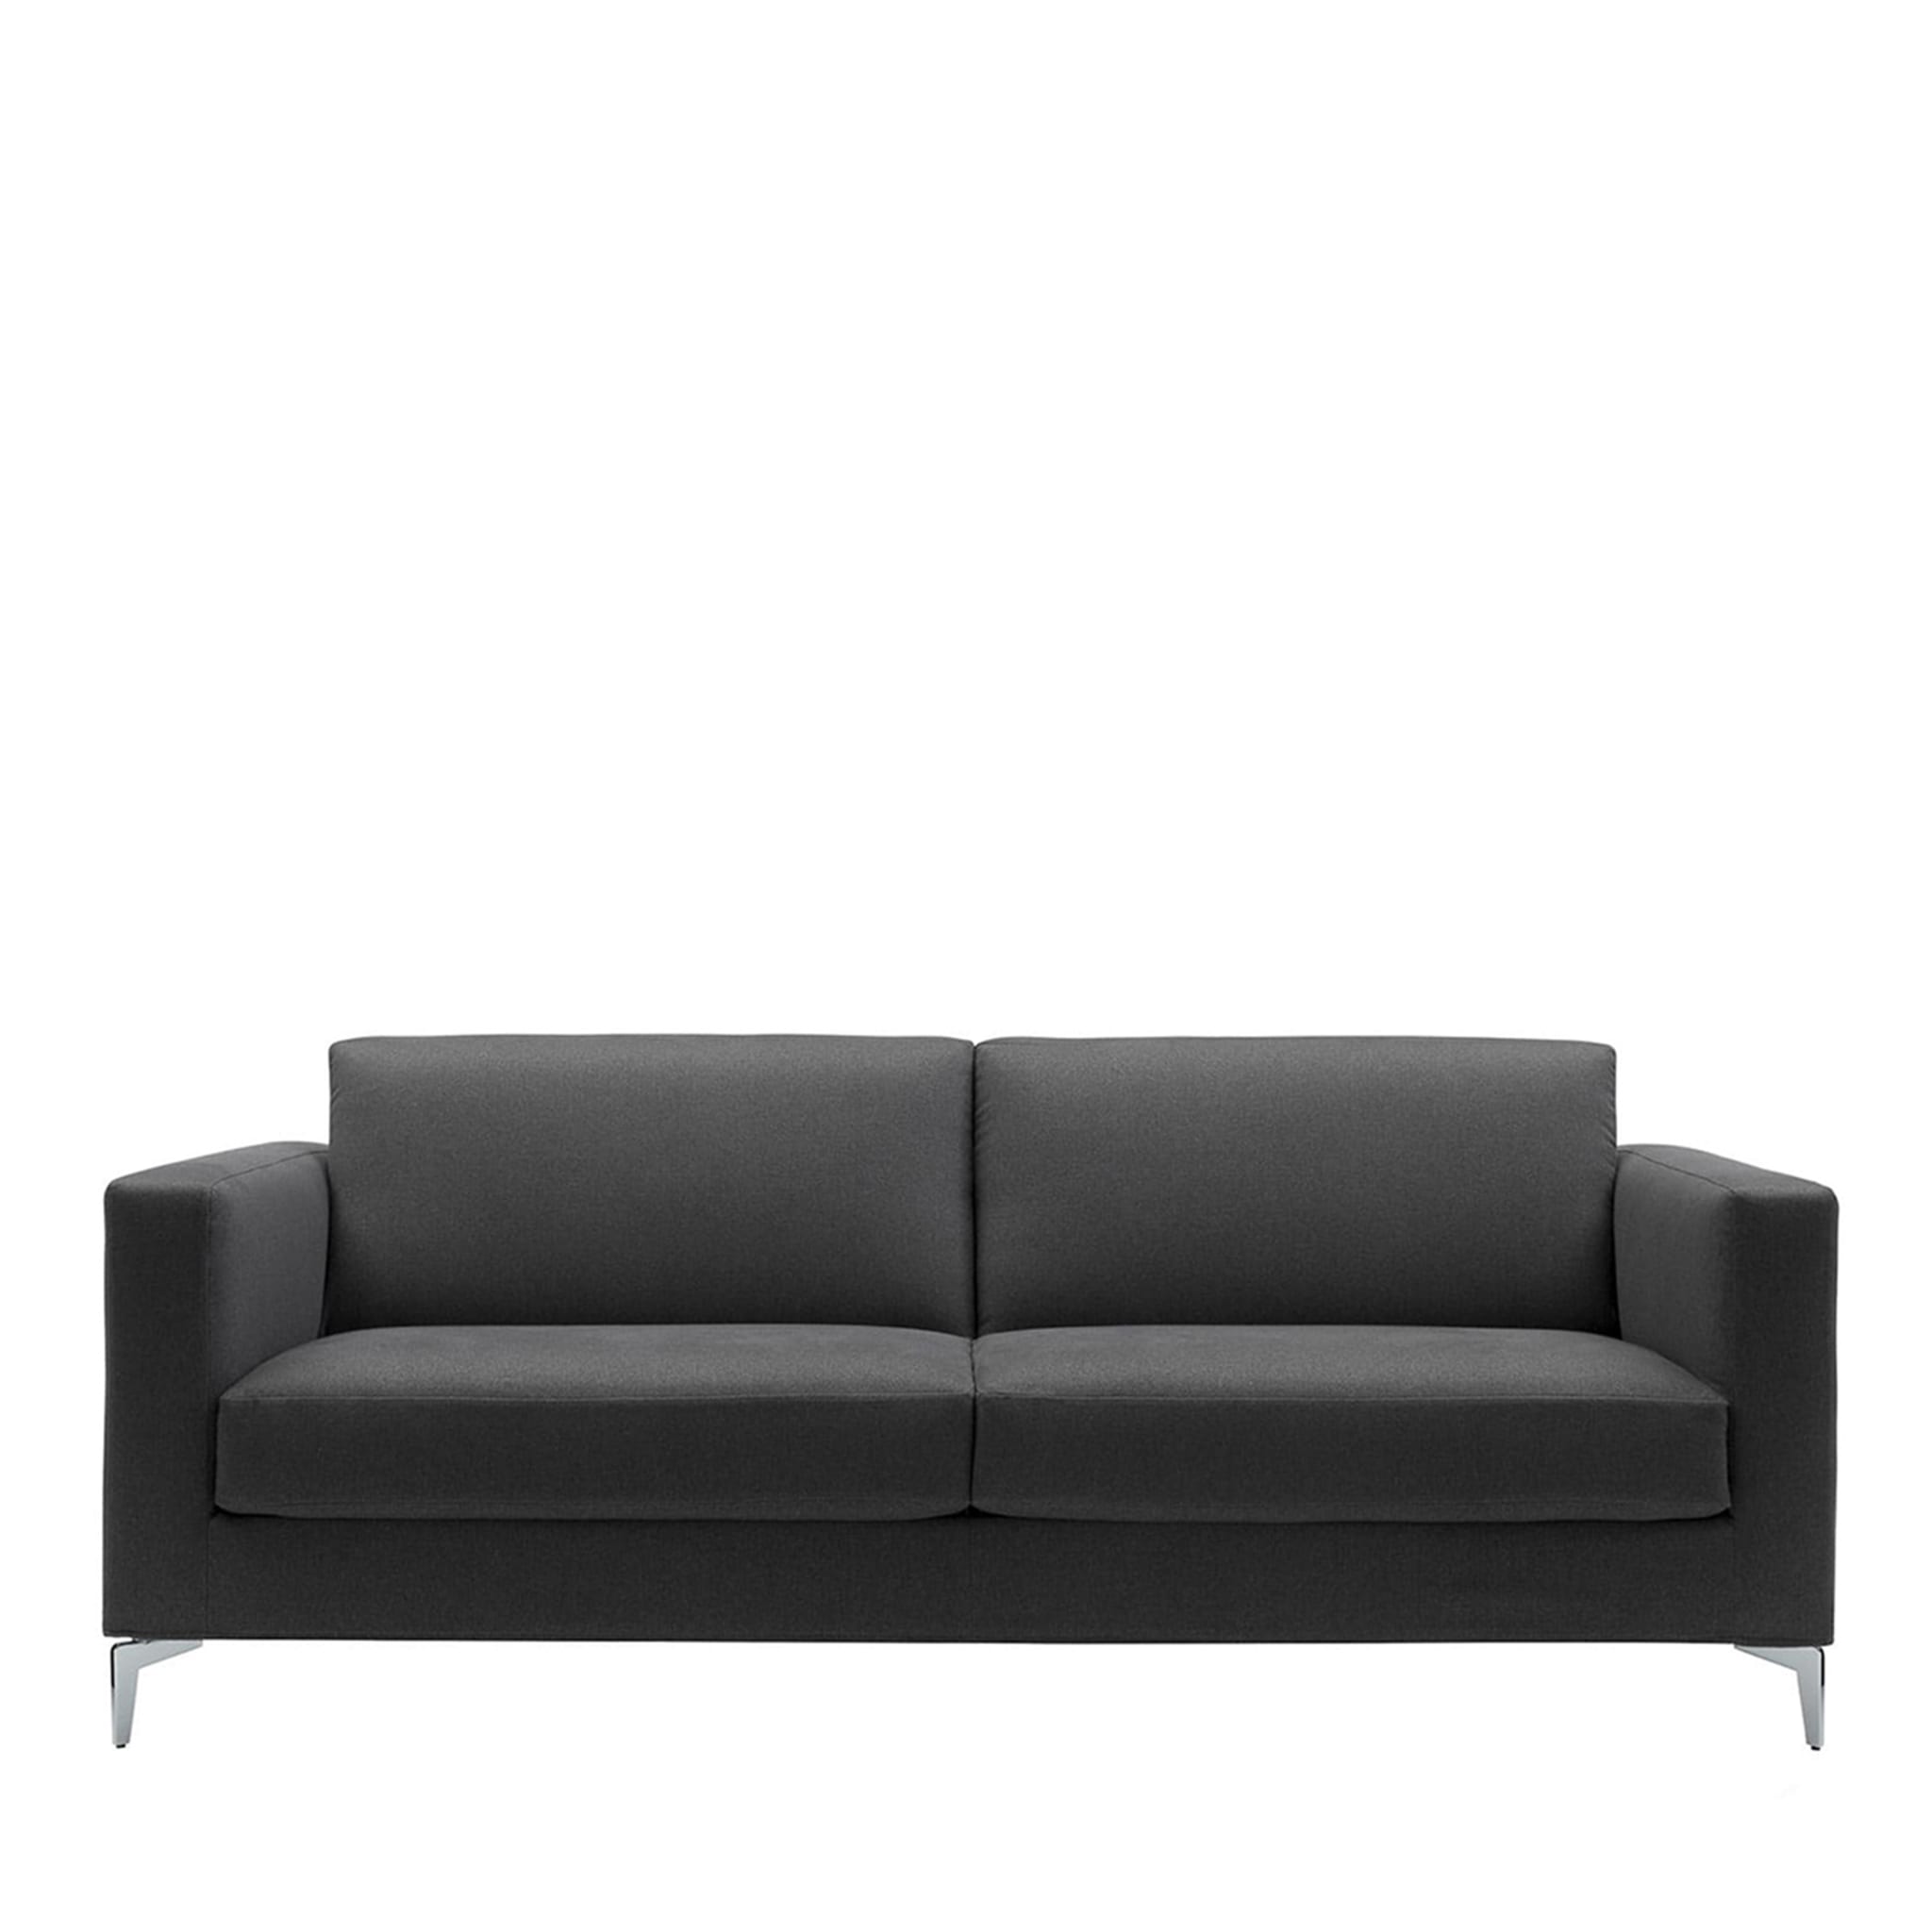 Richard Graphite-Gray Sofa Bed - Main view